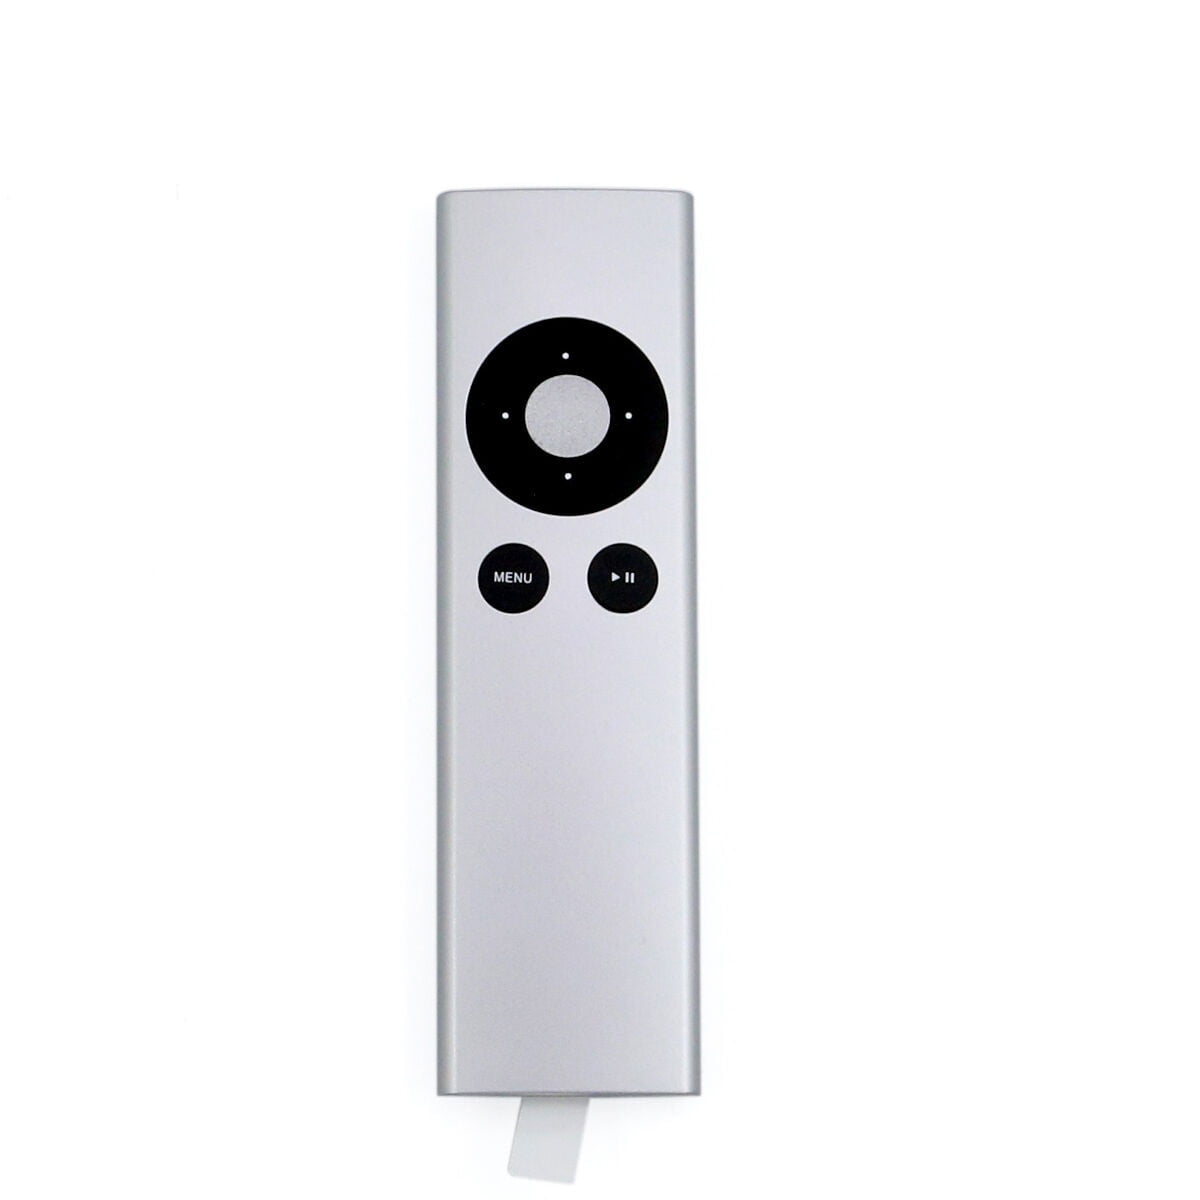 NEW Remote fit for Apple TV 1st 2nd 3rd Gen Mac Mini Macbook Desktop A1156 A1218 